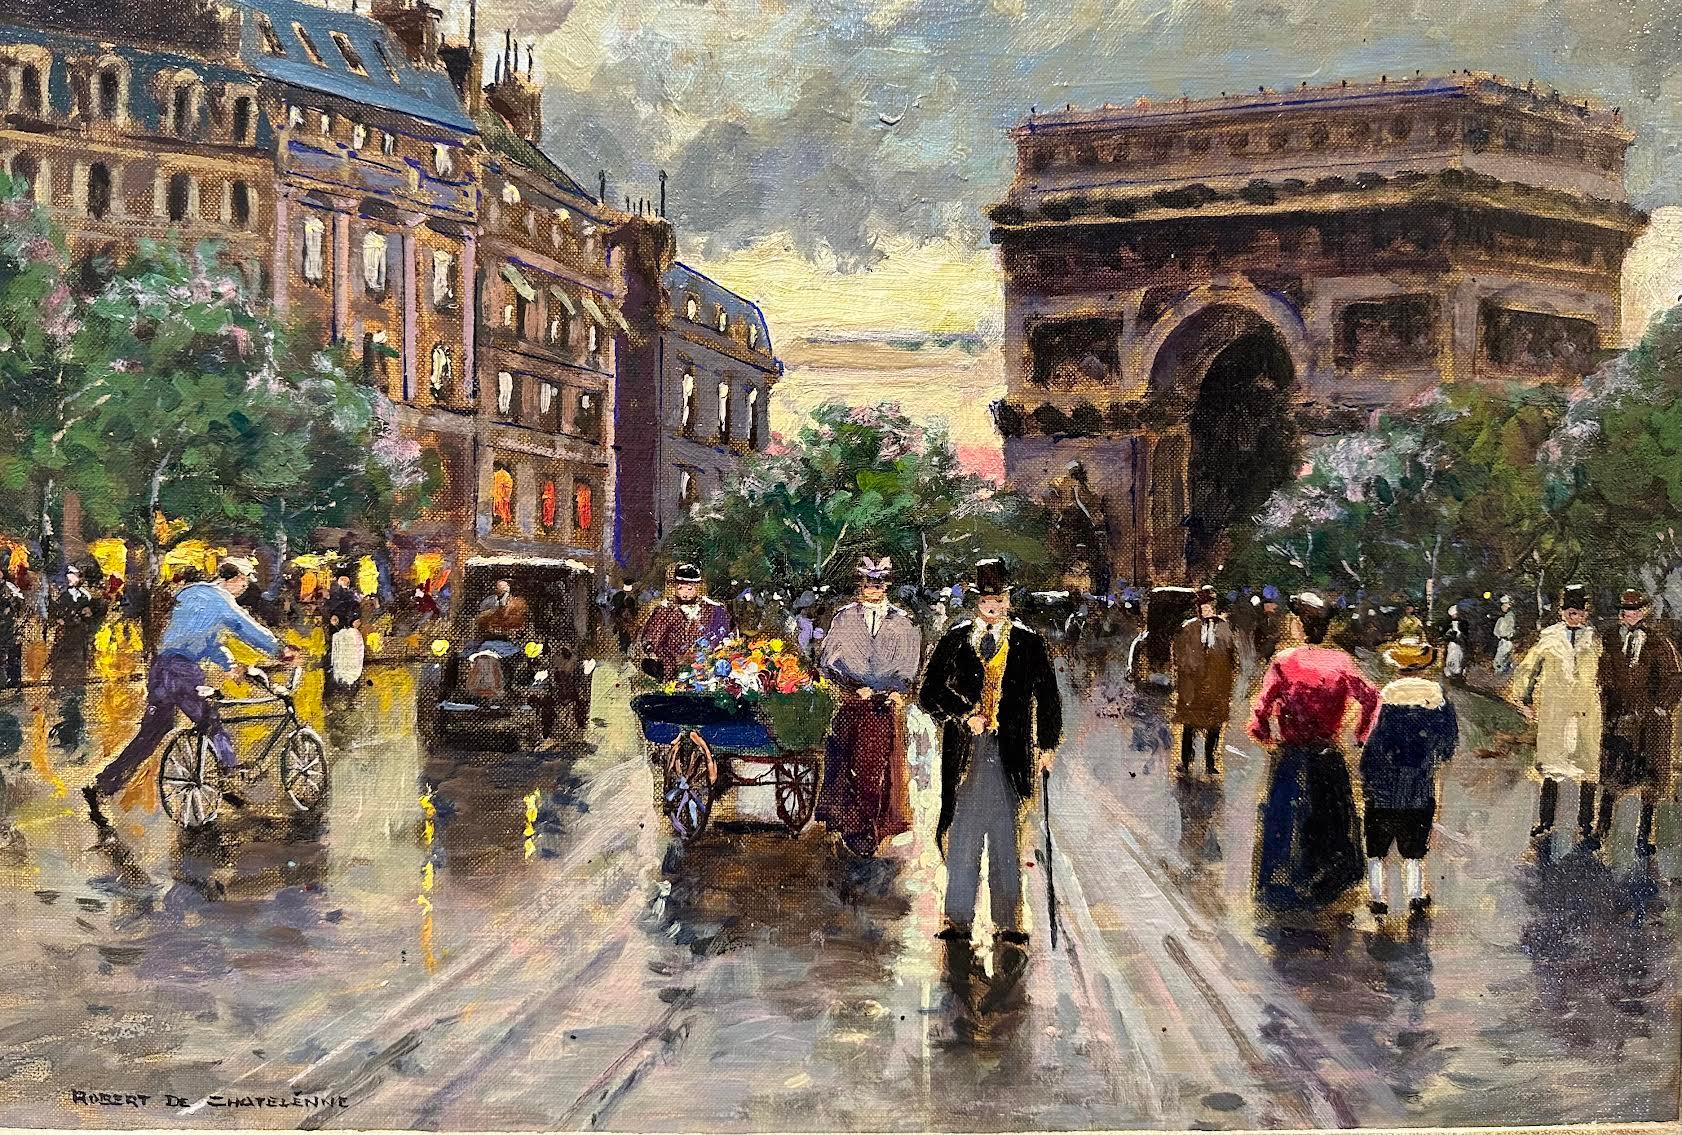 American Robert De Chatelenne Impressionist Parisian Street Scene Framed Oil on Canvas For Sale